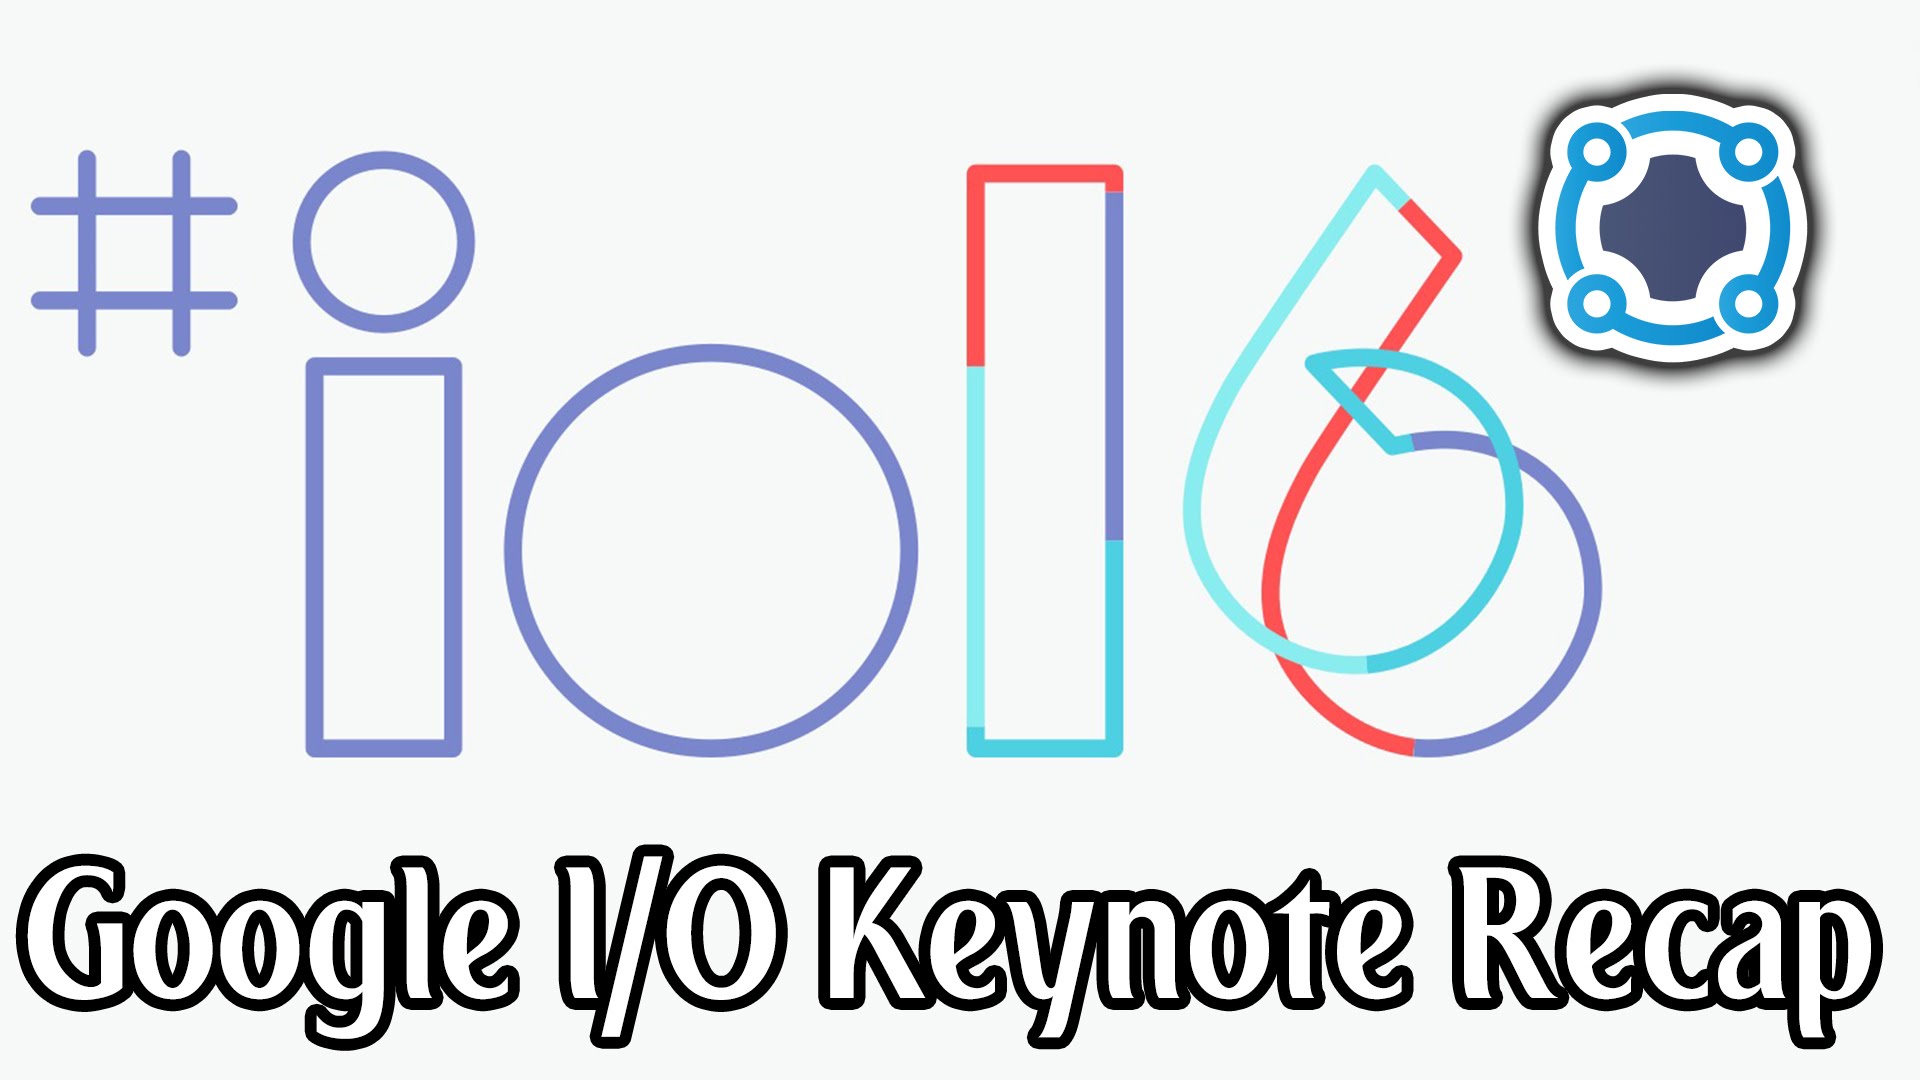 Recap - Google I/O 2016 Keynote